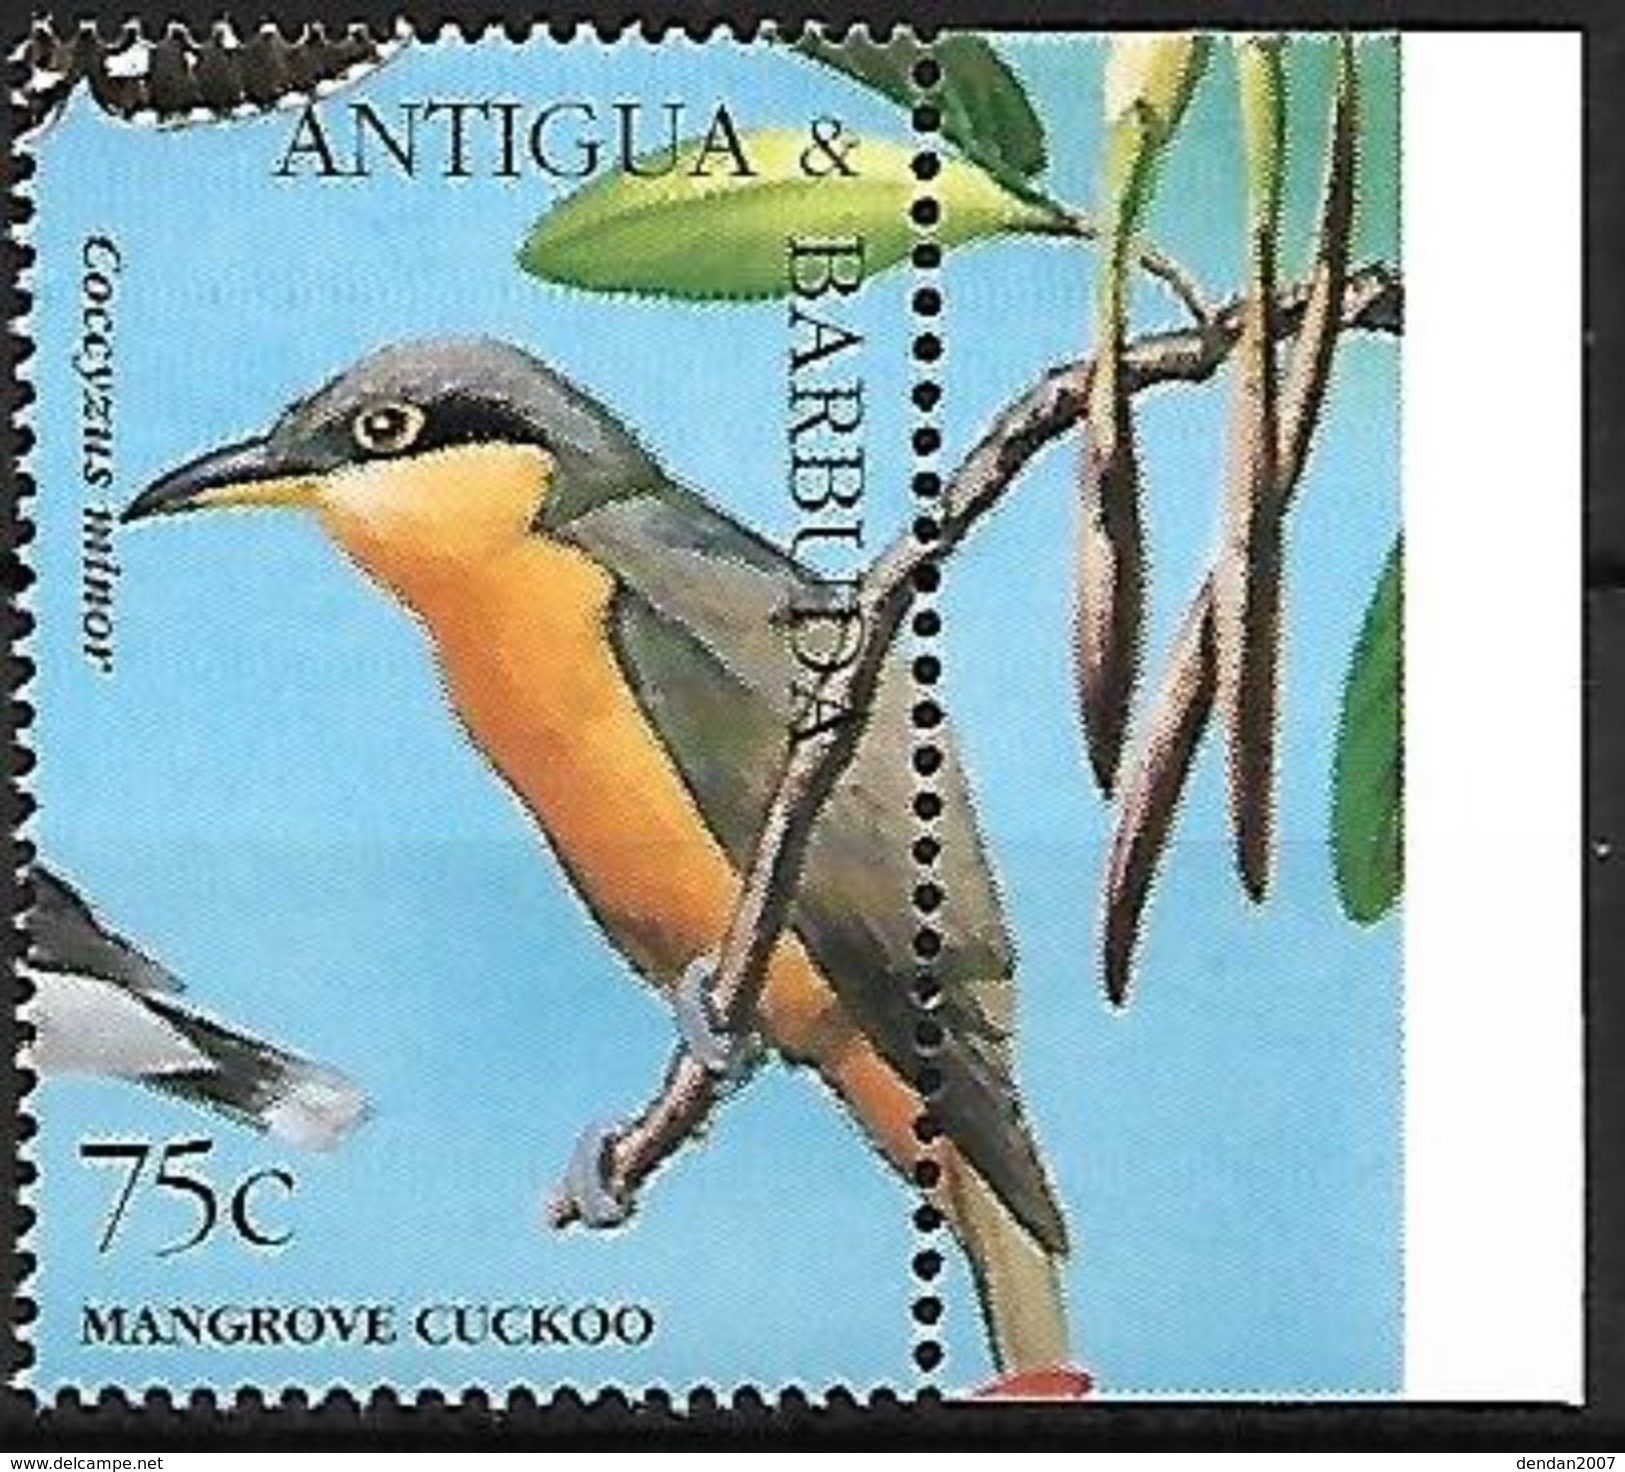 Antigua & Barbuda - 1995 - MNH - Mangove Cuckoo (Coccyzus Minor) - Coucous, Touracos